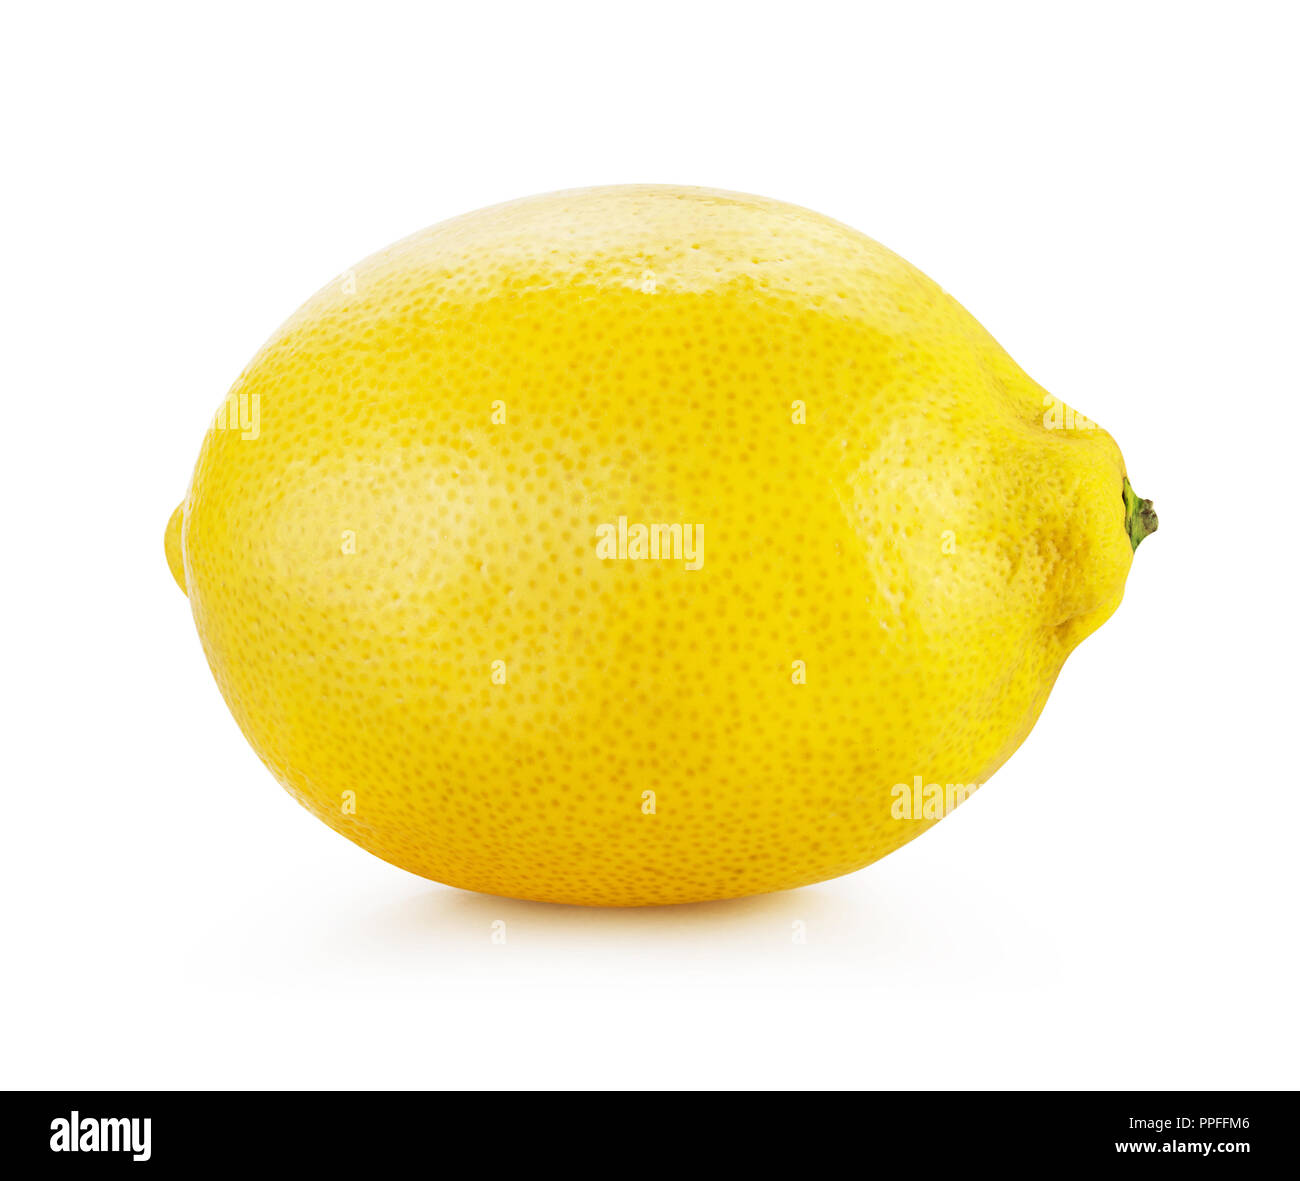 Ripe lemon on a white background Stock Photo